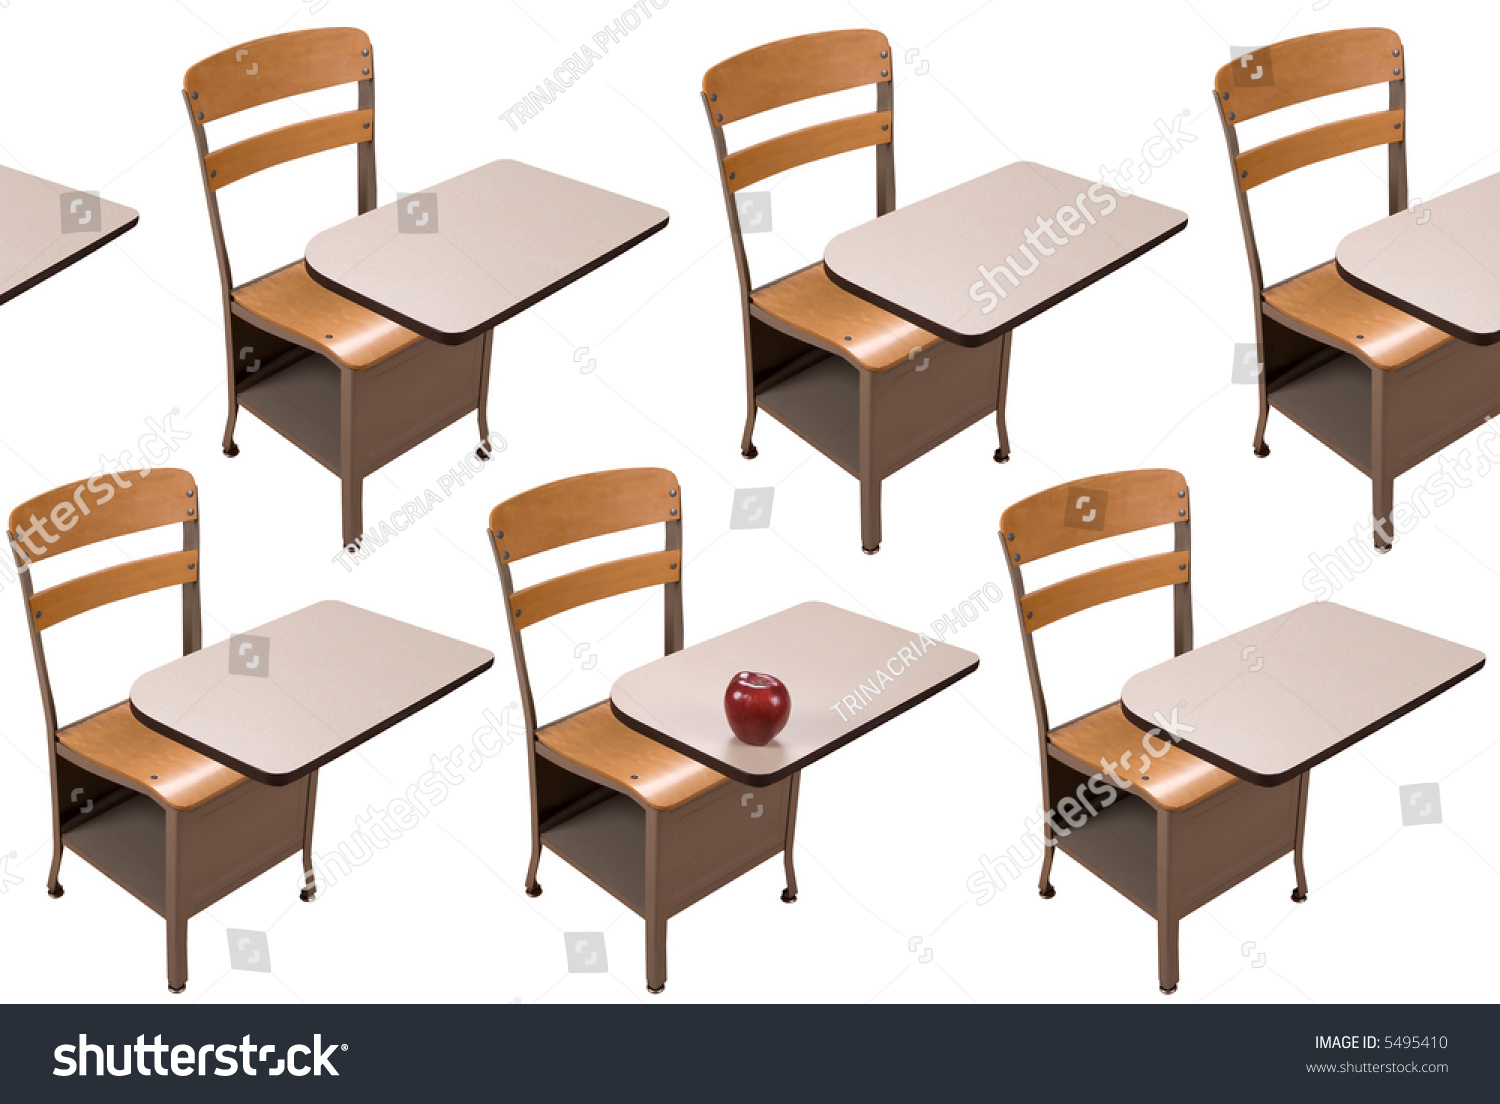 School Desks Rows One Desk Apple Stock Image Download Now